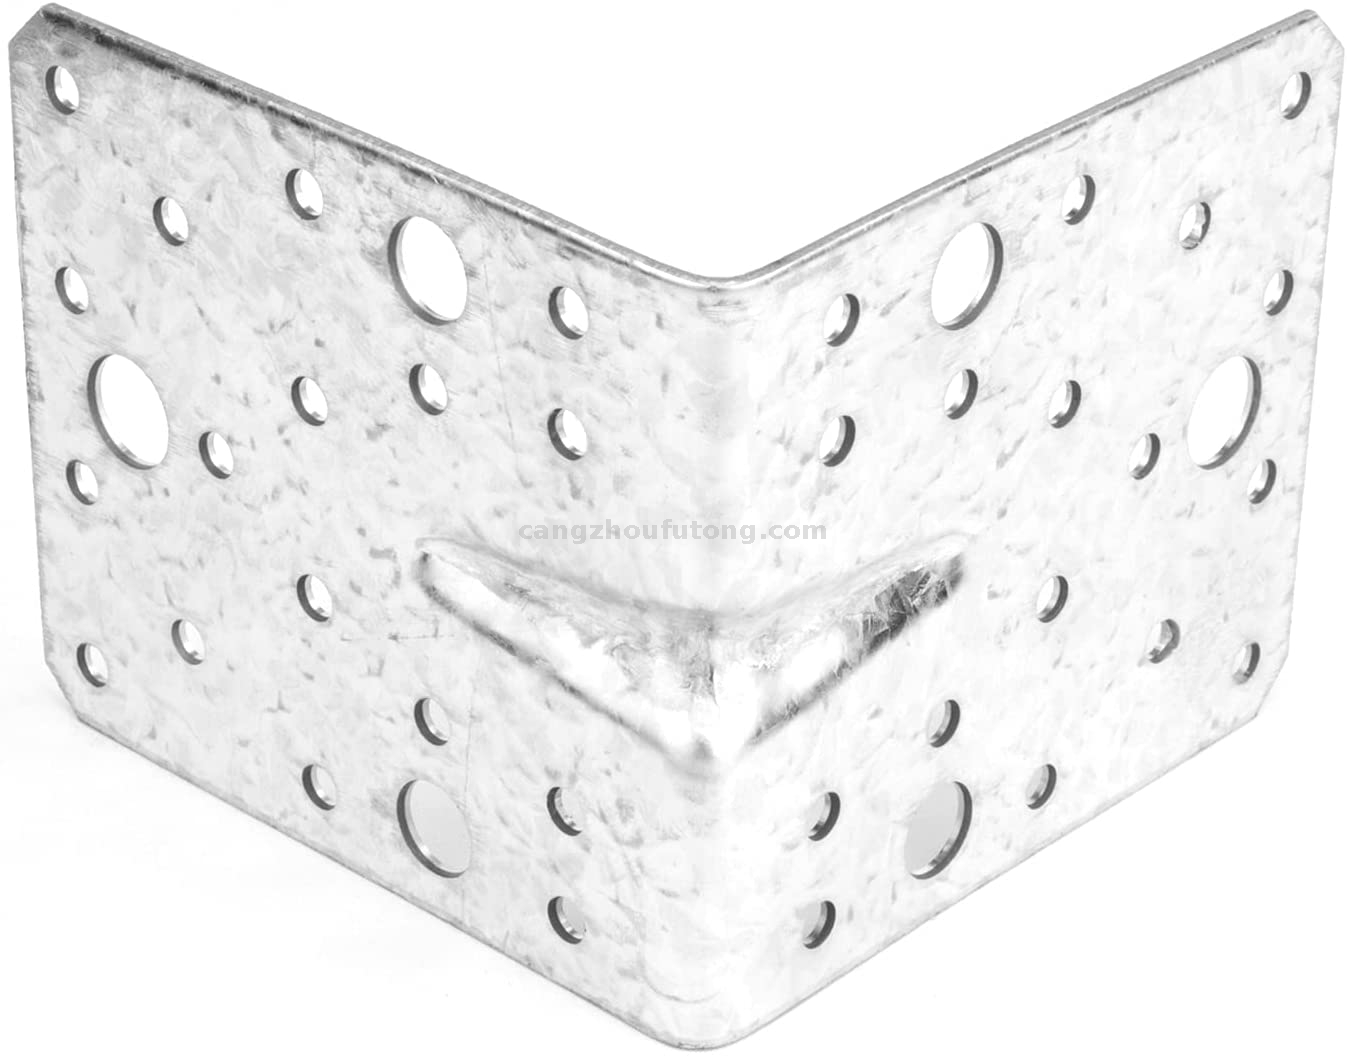 6-Zoll-Stahl L rechts Winkelhalterung Tieplatte Metallgelenkdicke 2,5mm Verstärkungsrippe stärkt Eckstütze für Holzregale Stecker